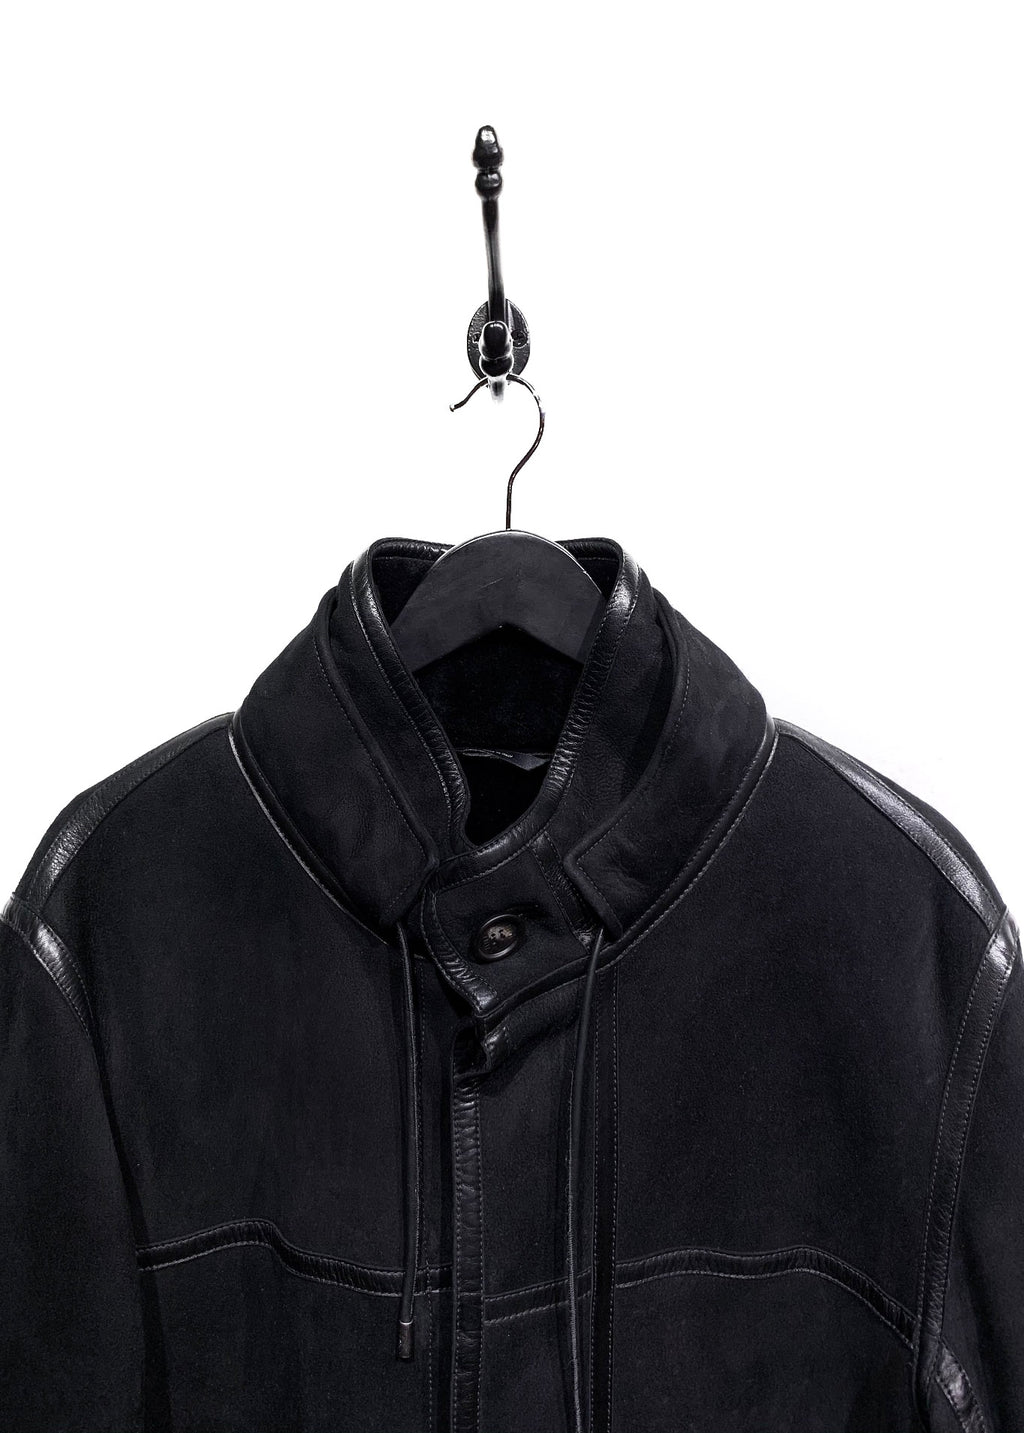 Fendi Black Leather Trim Shearling Coat